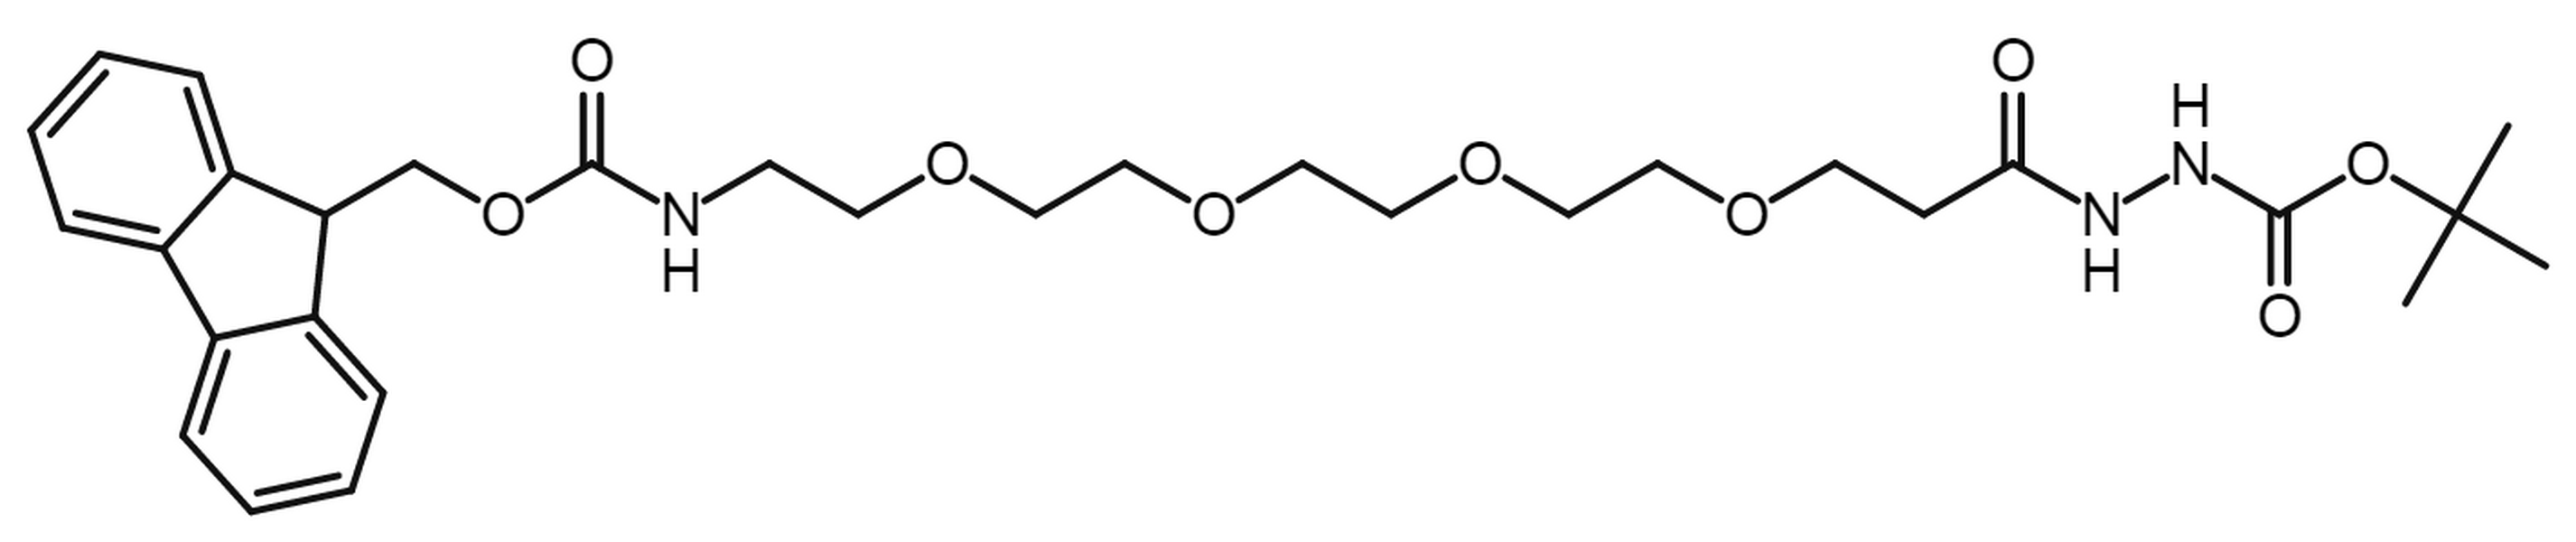 Fmoc-N-amido-PEG4-t-Boc-Hydrazide